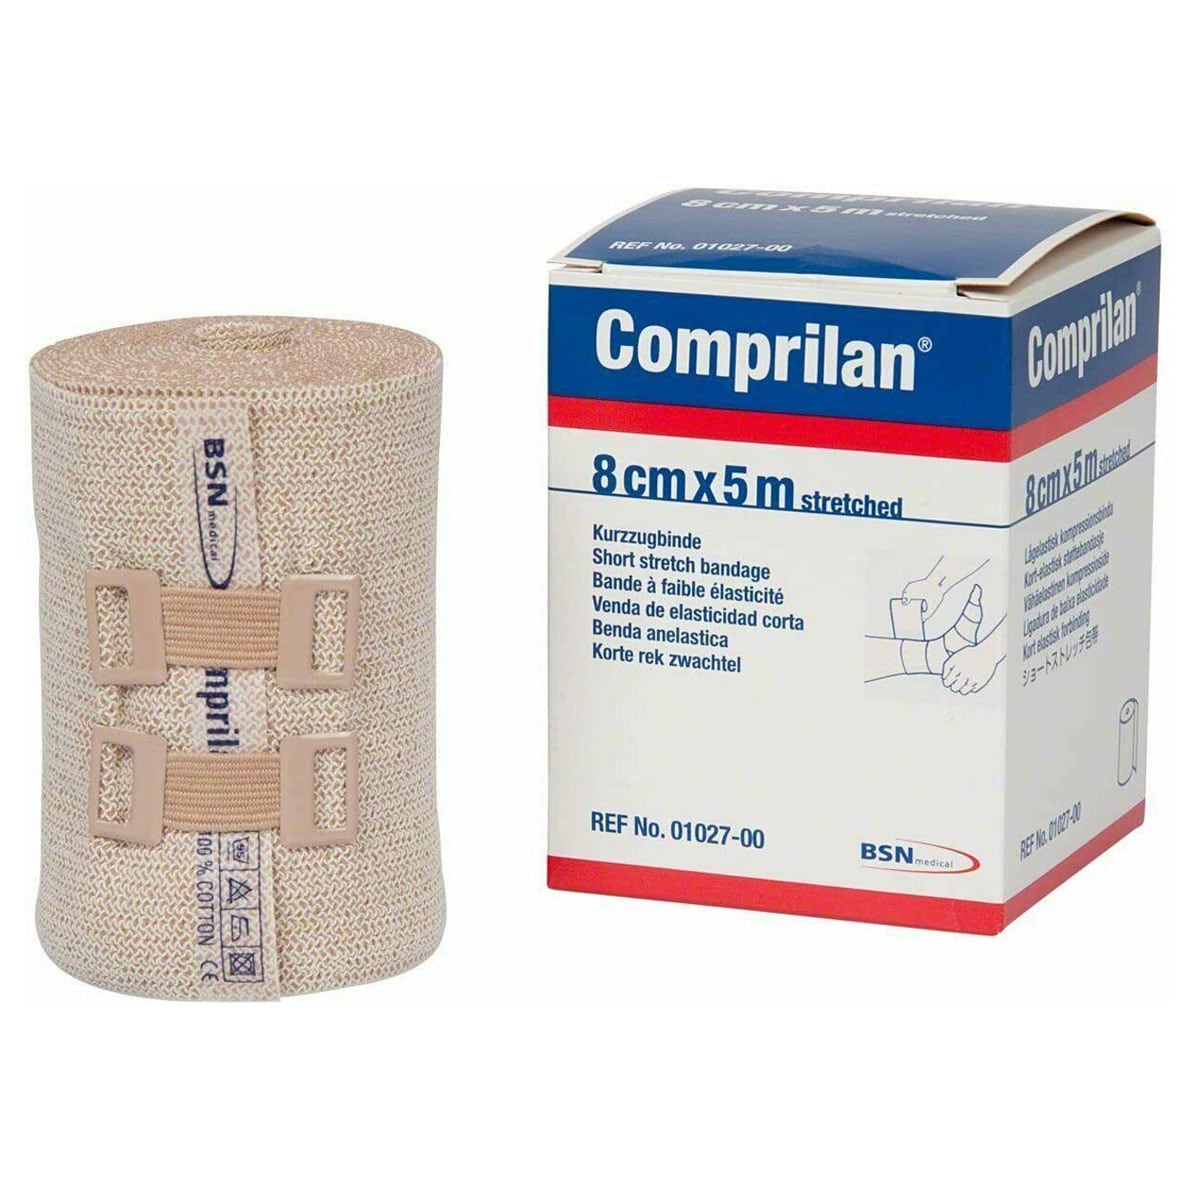 Comprilan Compression Bandage 8cm x 5m 1 Roll